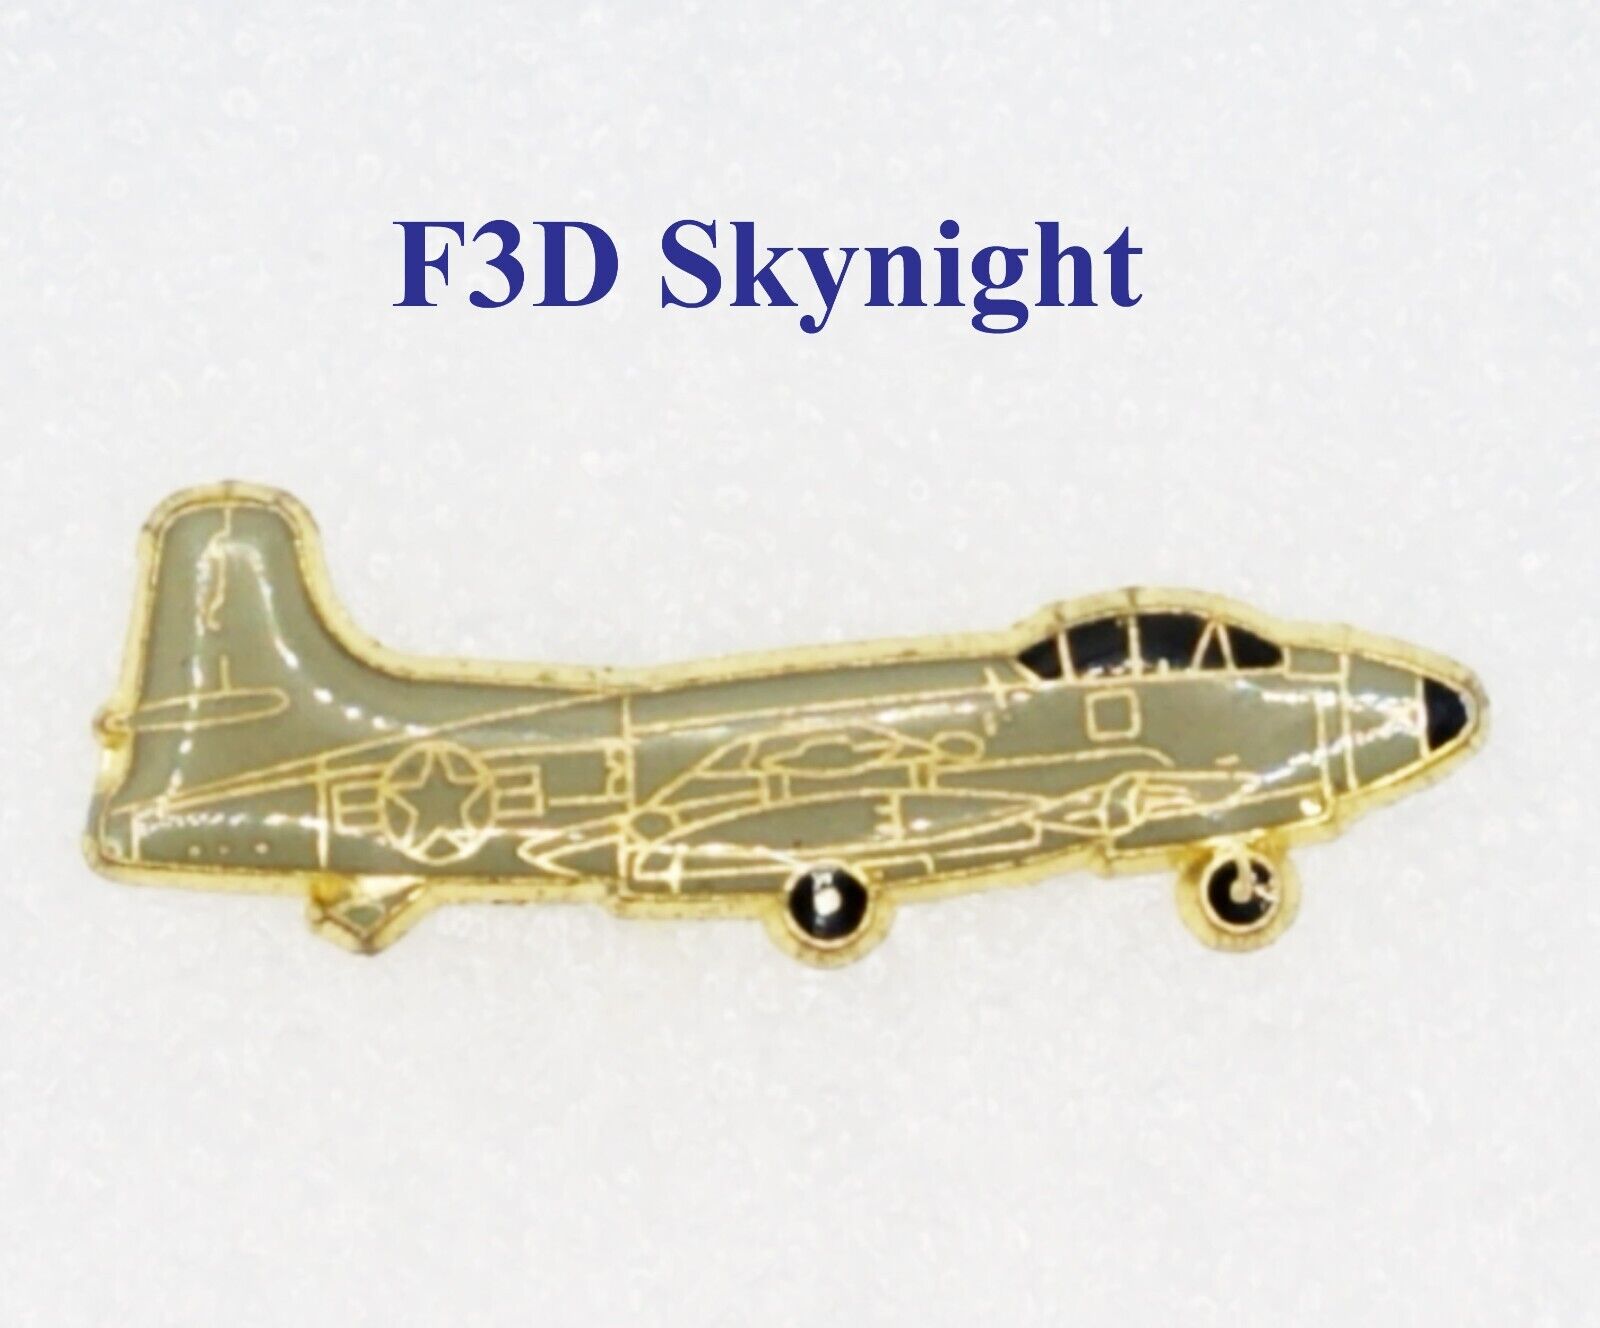 F3D SKYNIGHT (Douglas Aircraft) Commemorative Pin Metal Navy